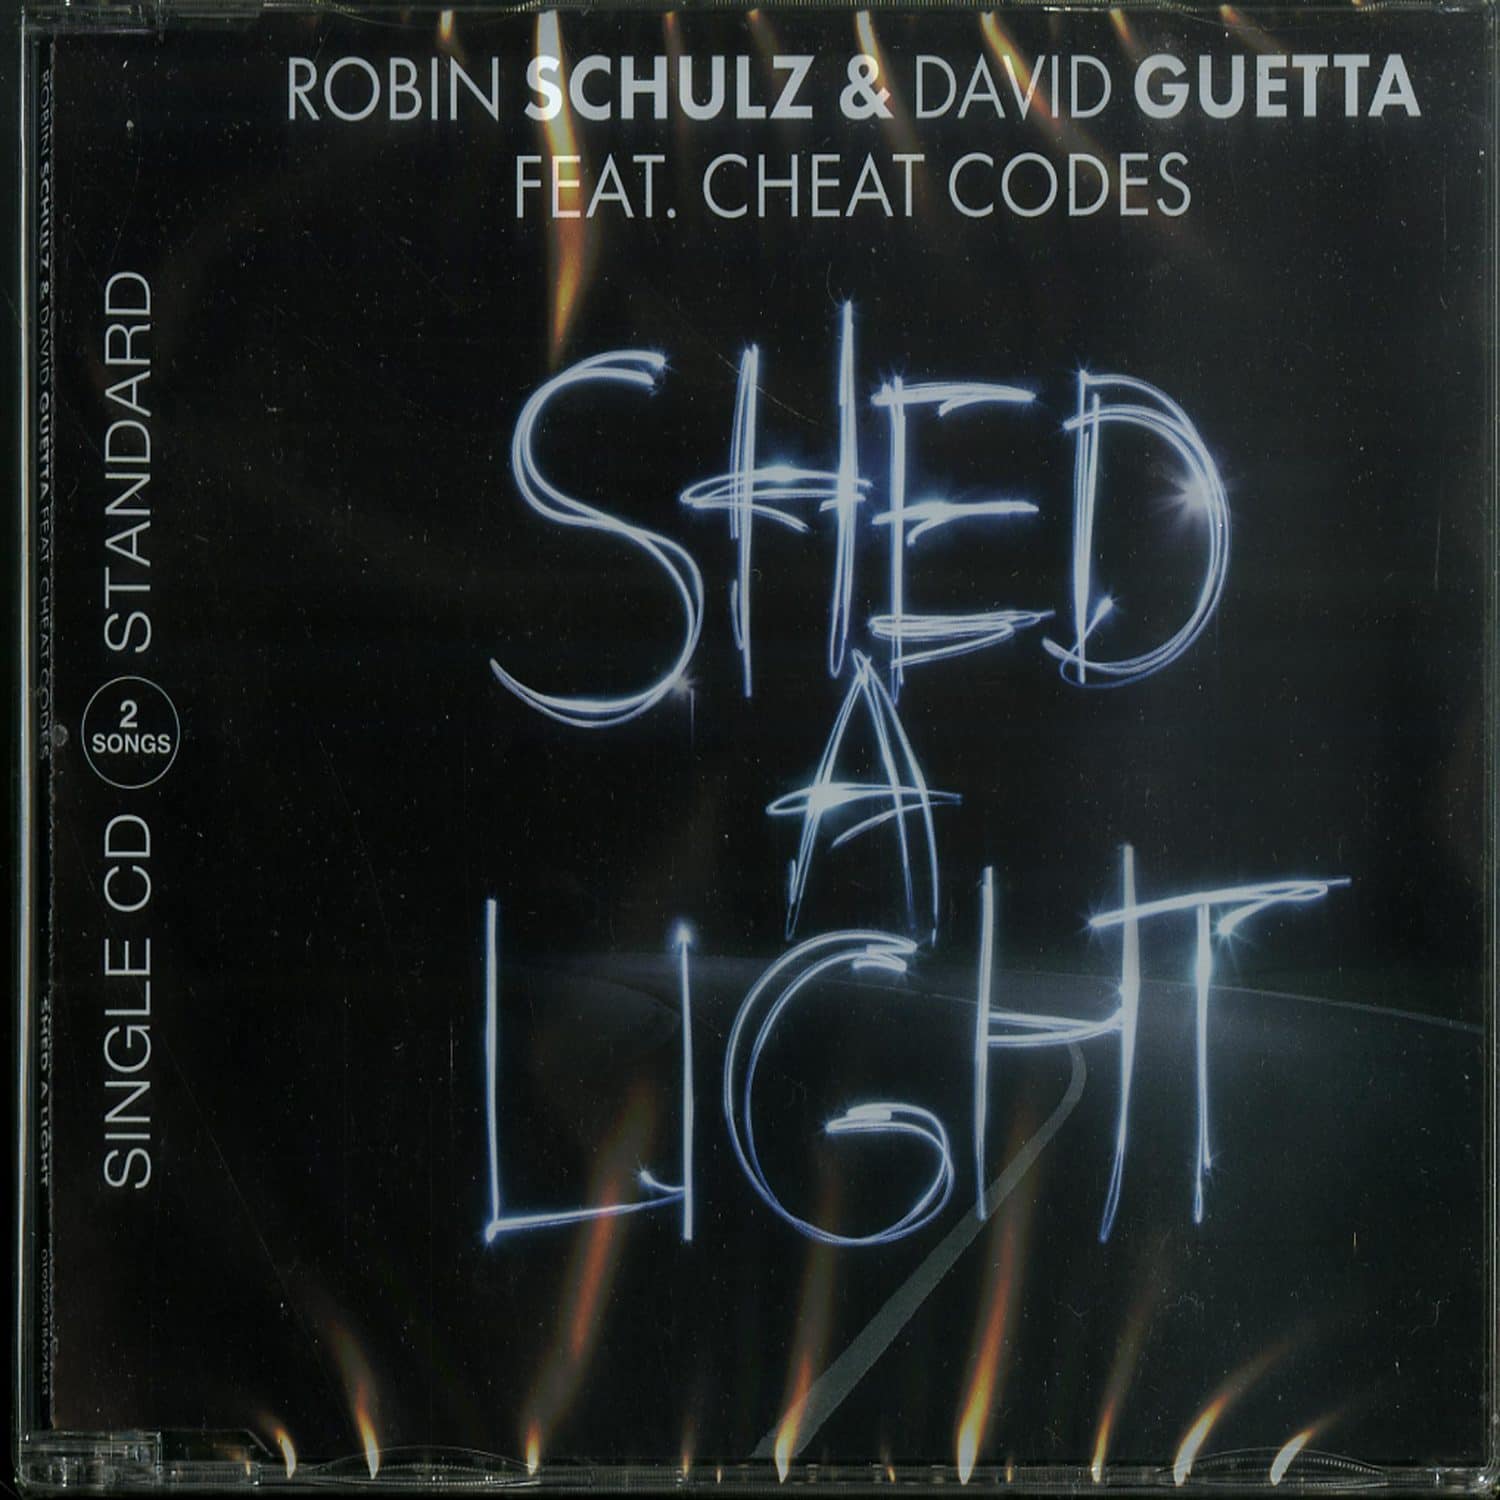 Robin Schulz & David Guetta feat. Cheat Codes - SHED A LIGHT 